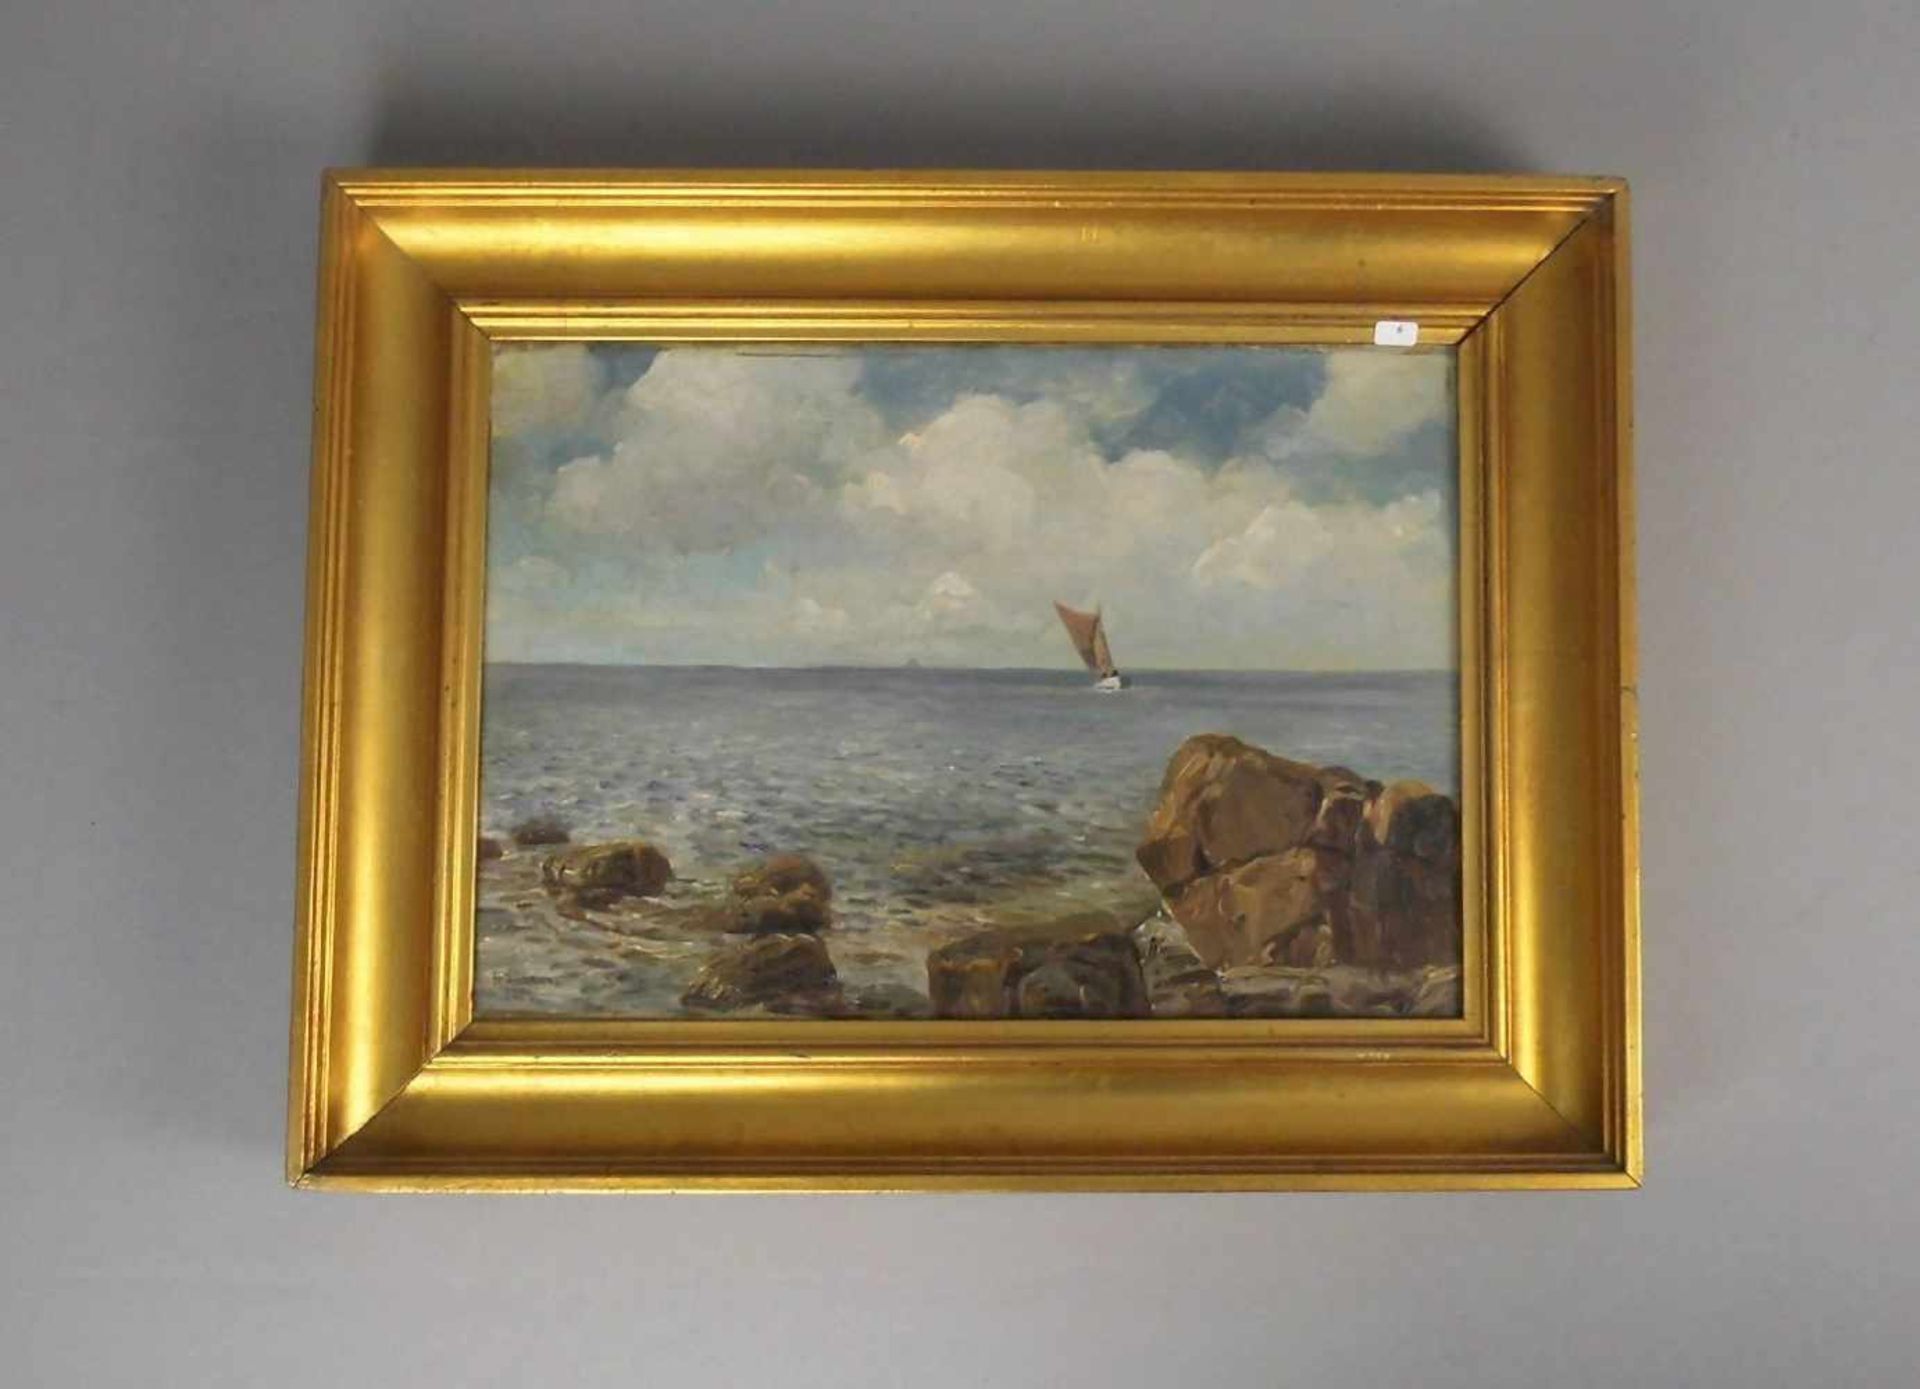 LÜBBERS, HOLGER PETER SVANE (Kopenhagen 1850-1931 ebd.), Gemälde / painting: "Segelschiff vor